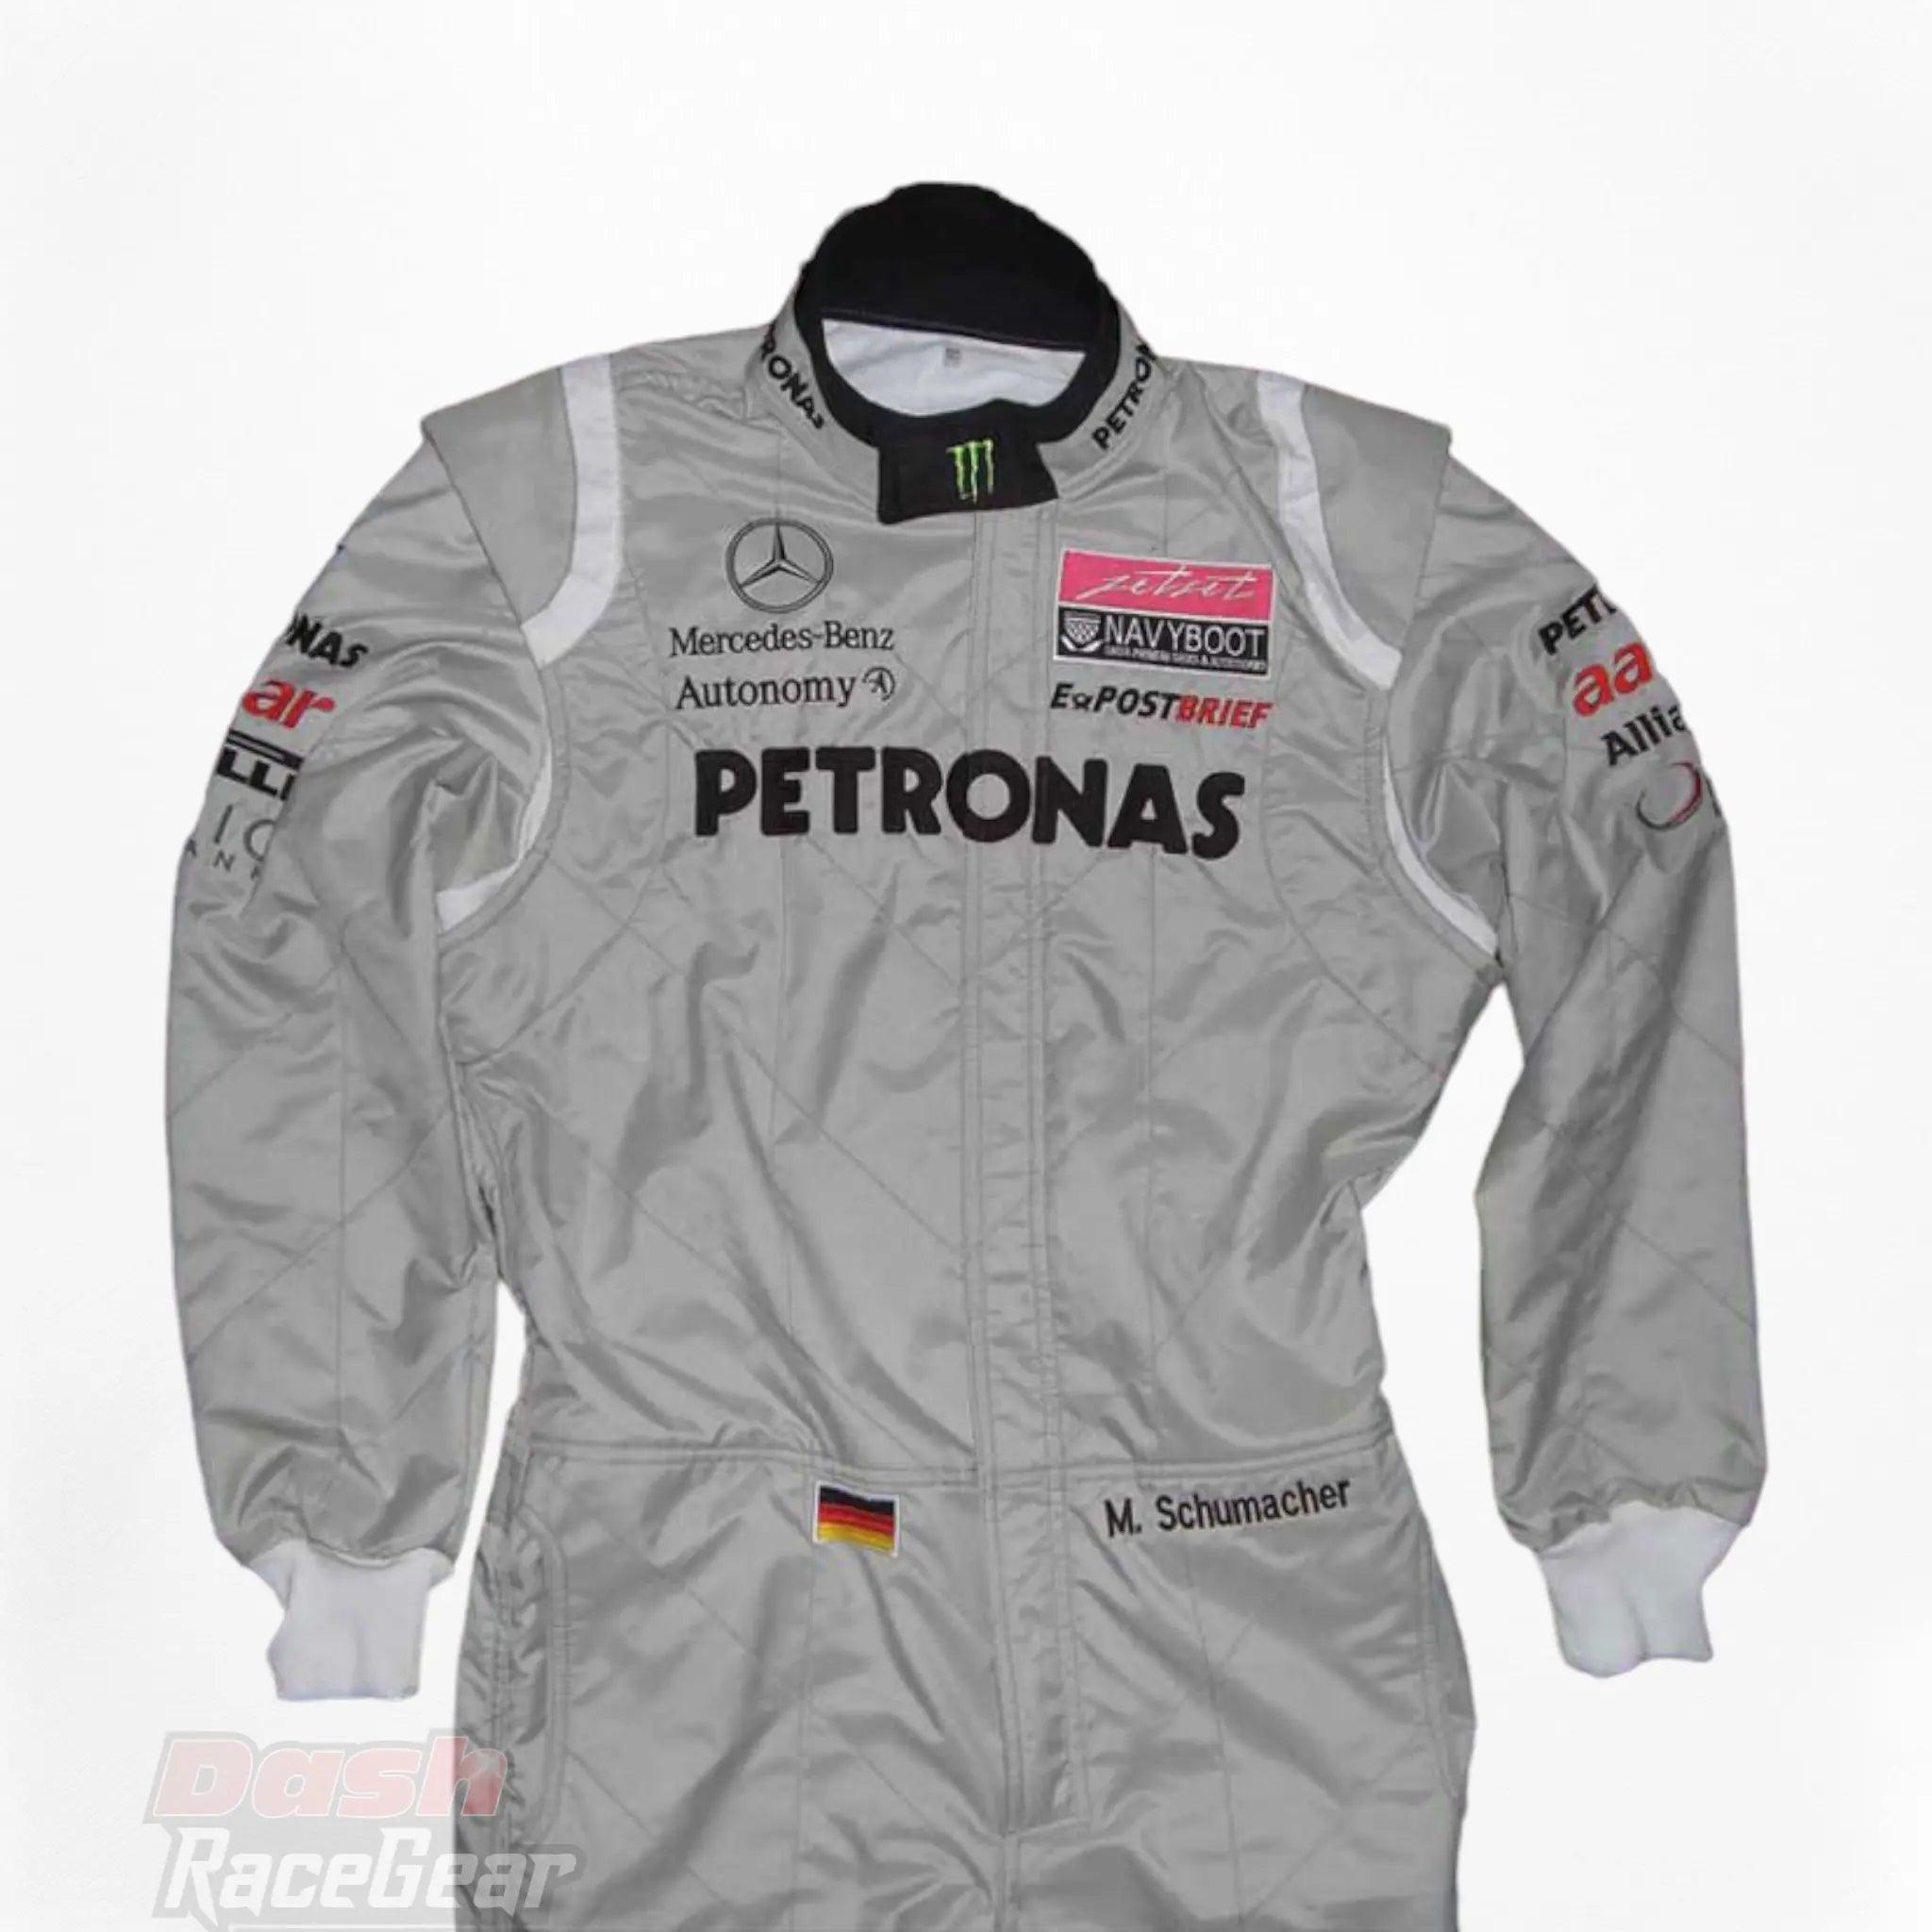 2011 Michael Schumacher Mercedes Benz F1 Embroidered Racing Suit - Dash Racegear 